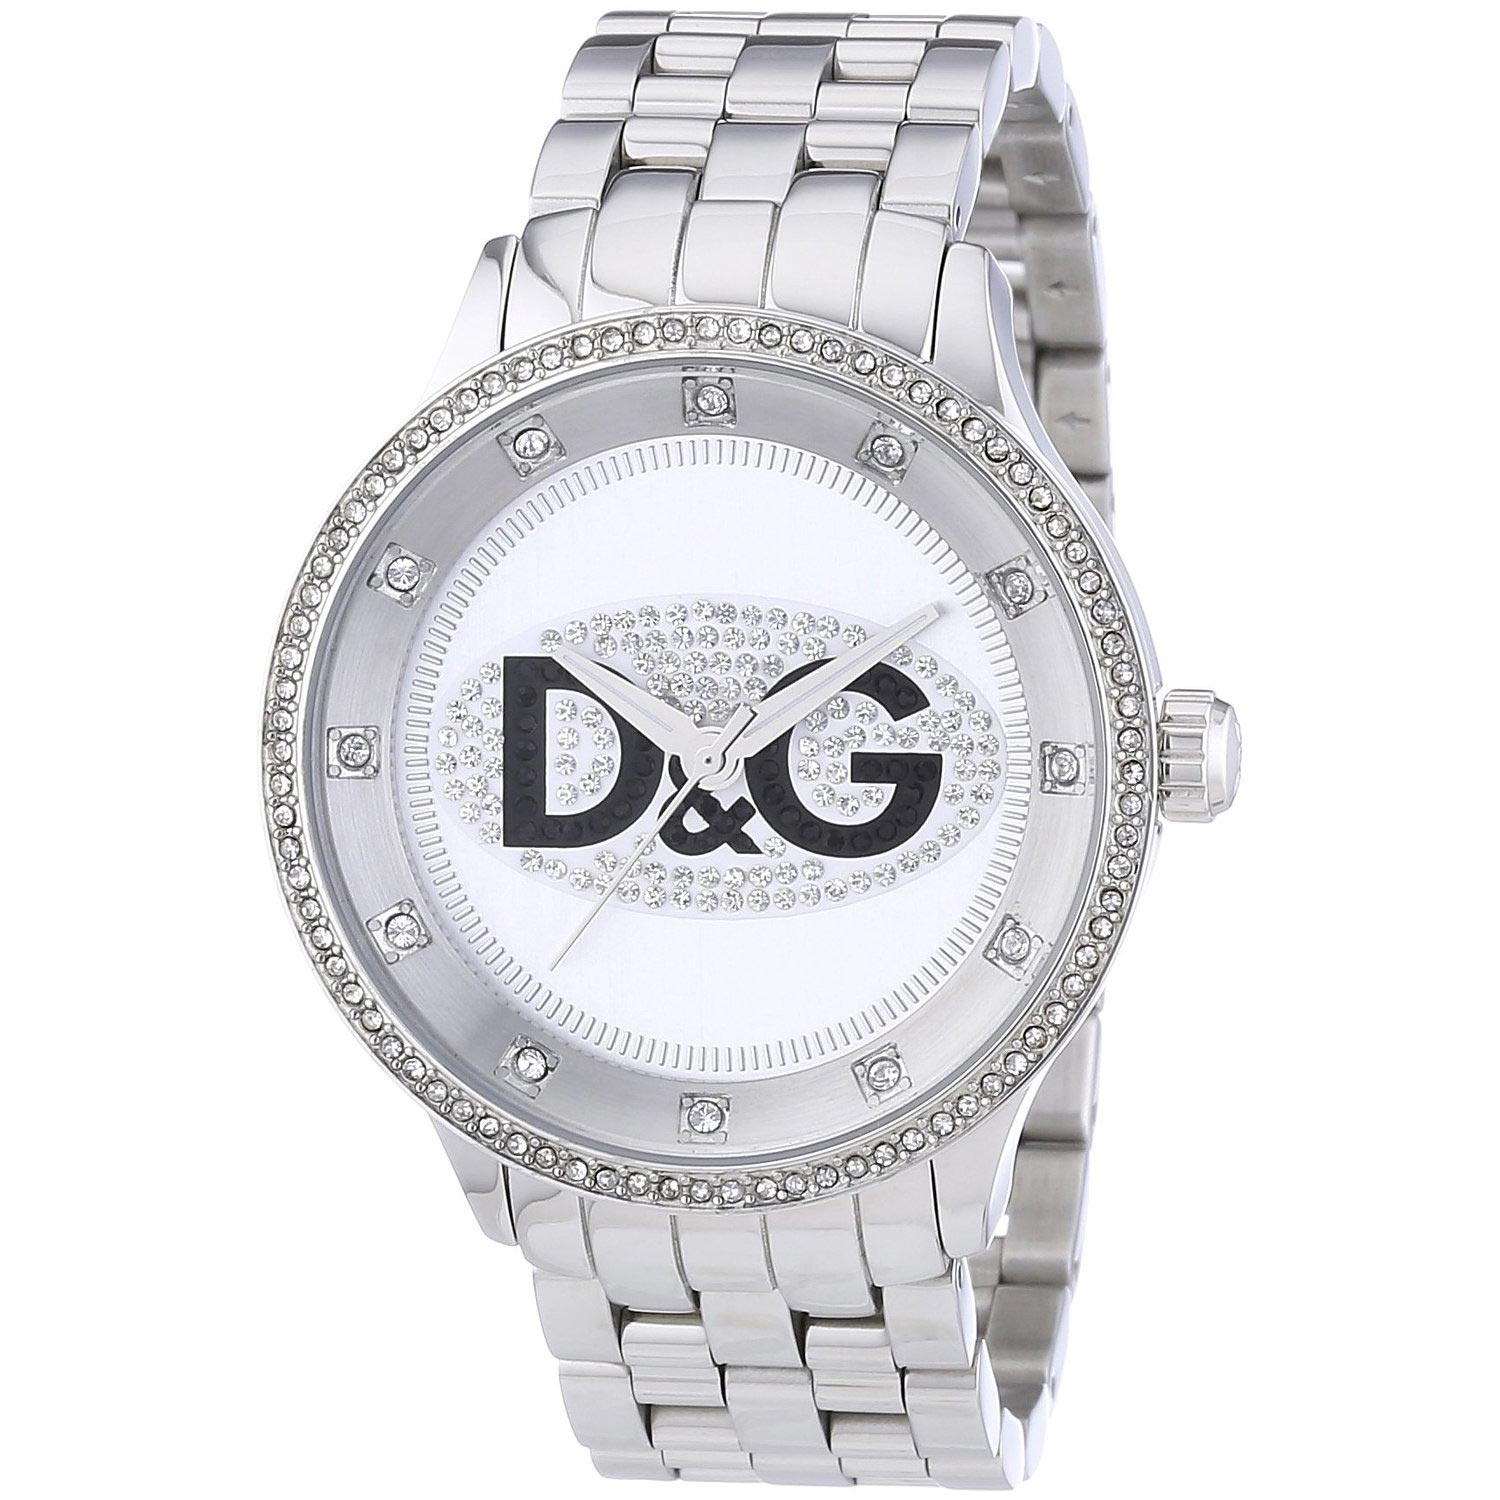 D&G-Dolce-&-Gabbana-silberne-Armbanduhr-DW0131-mit-Edelstahlarmband-1